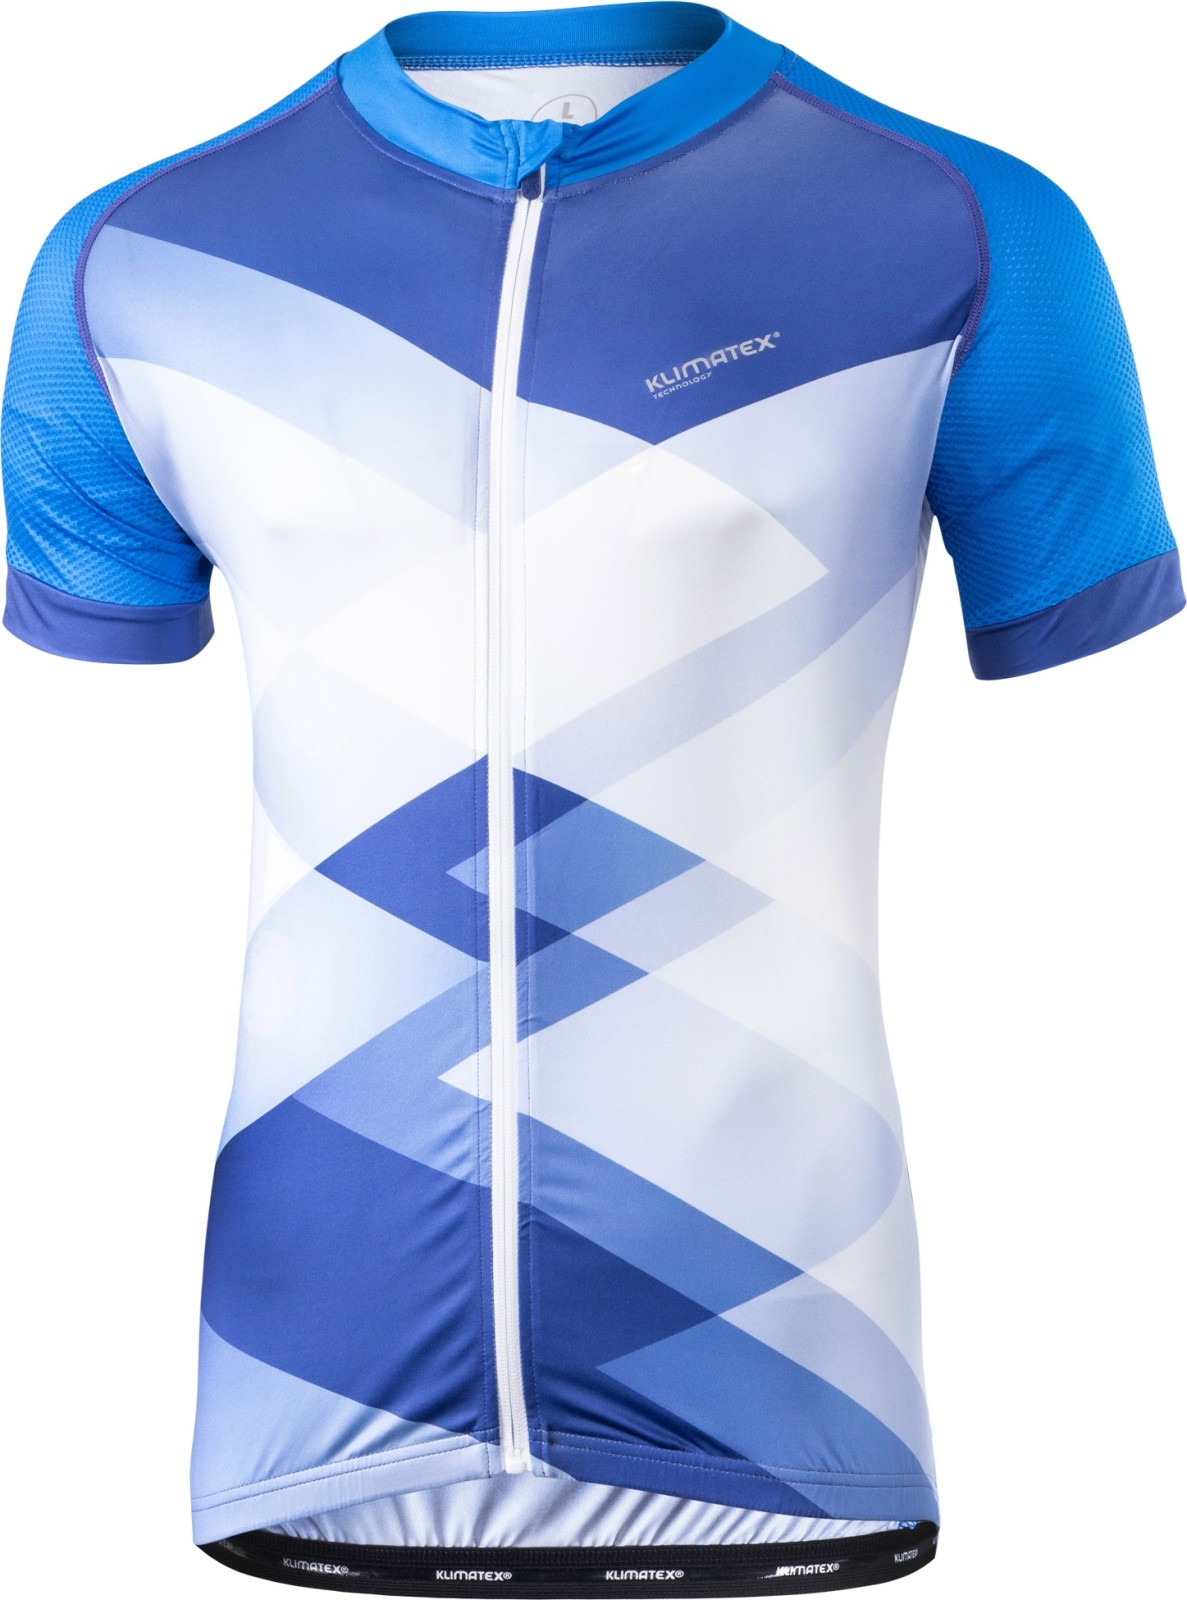 Men's short sleeve cycling jersey